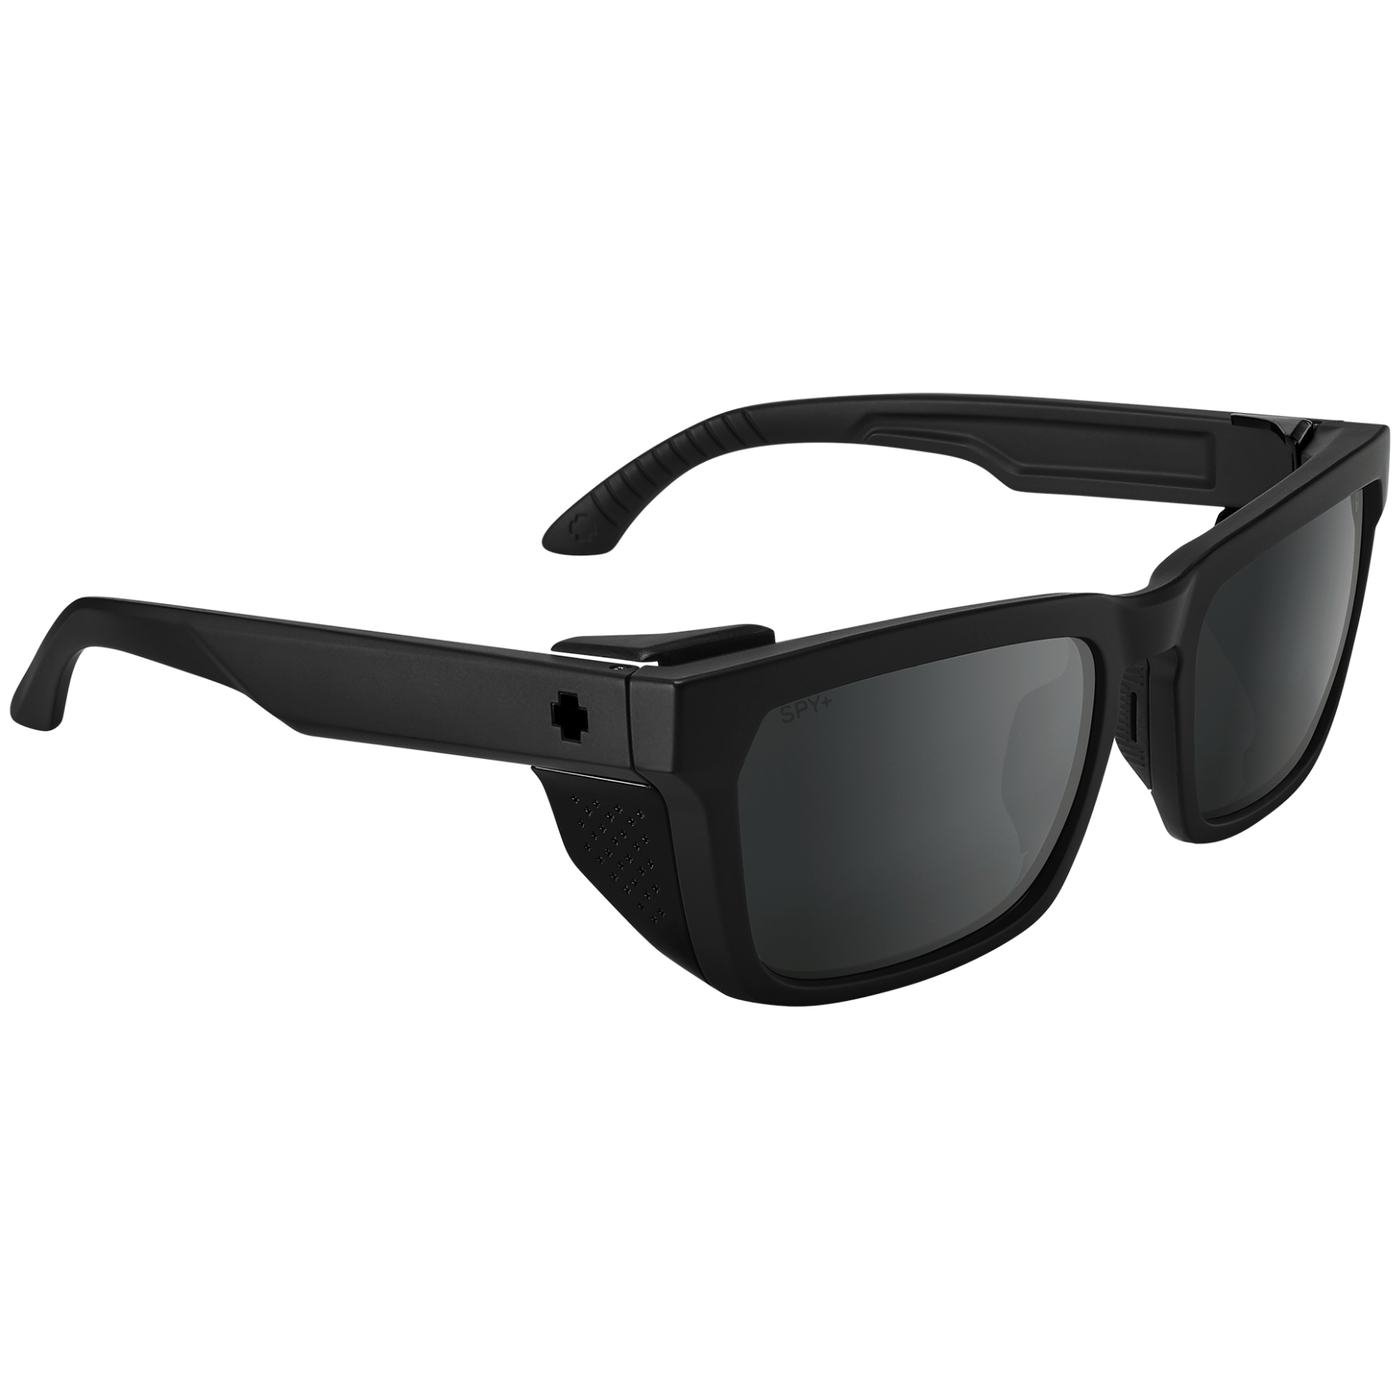 Black HELM TECH sunglasses